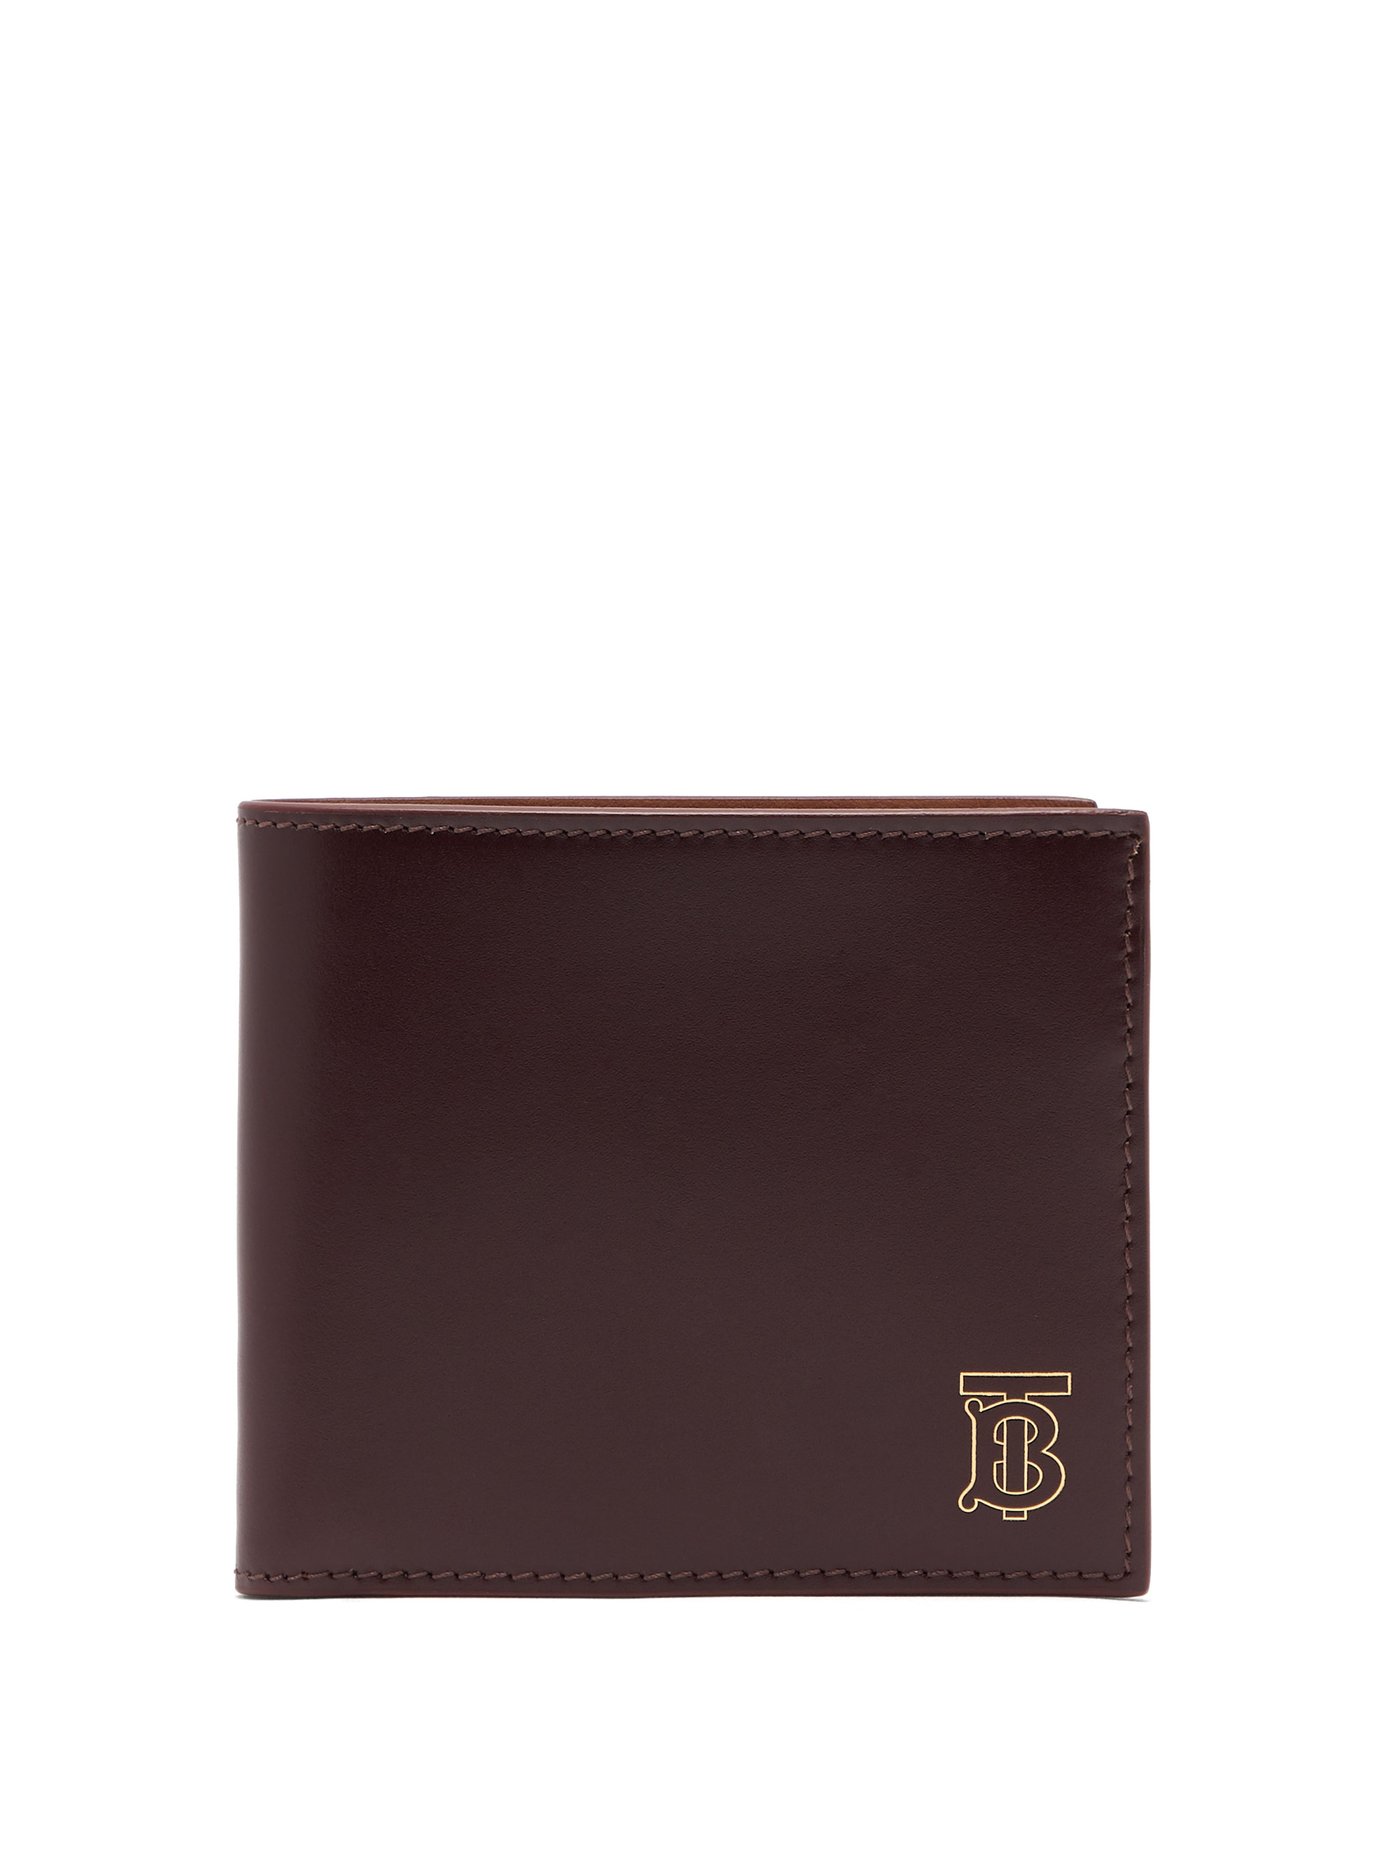 burberry tb wallet